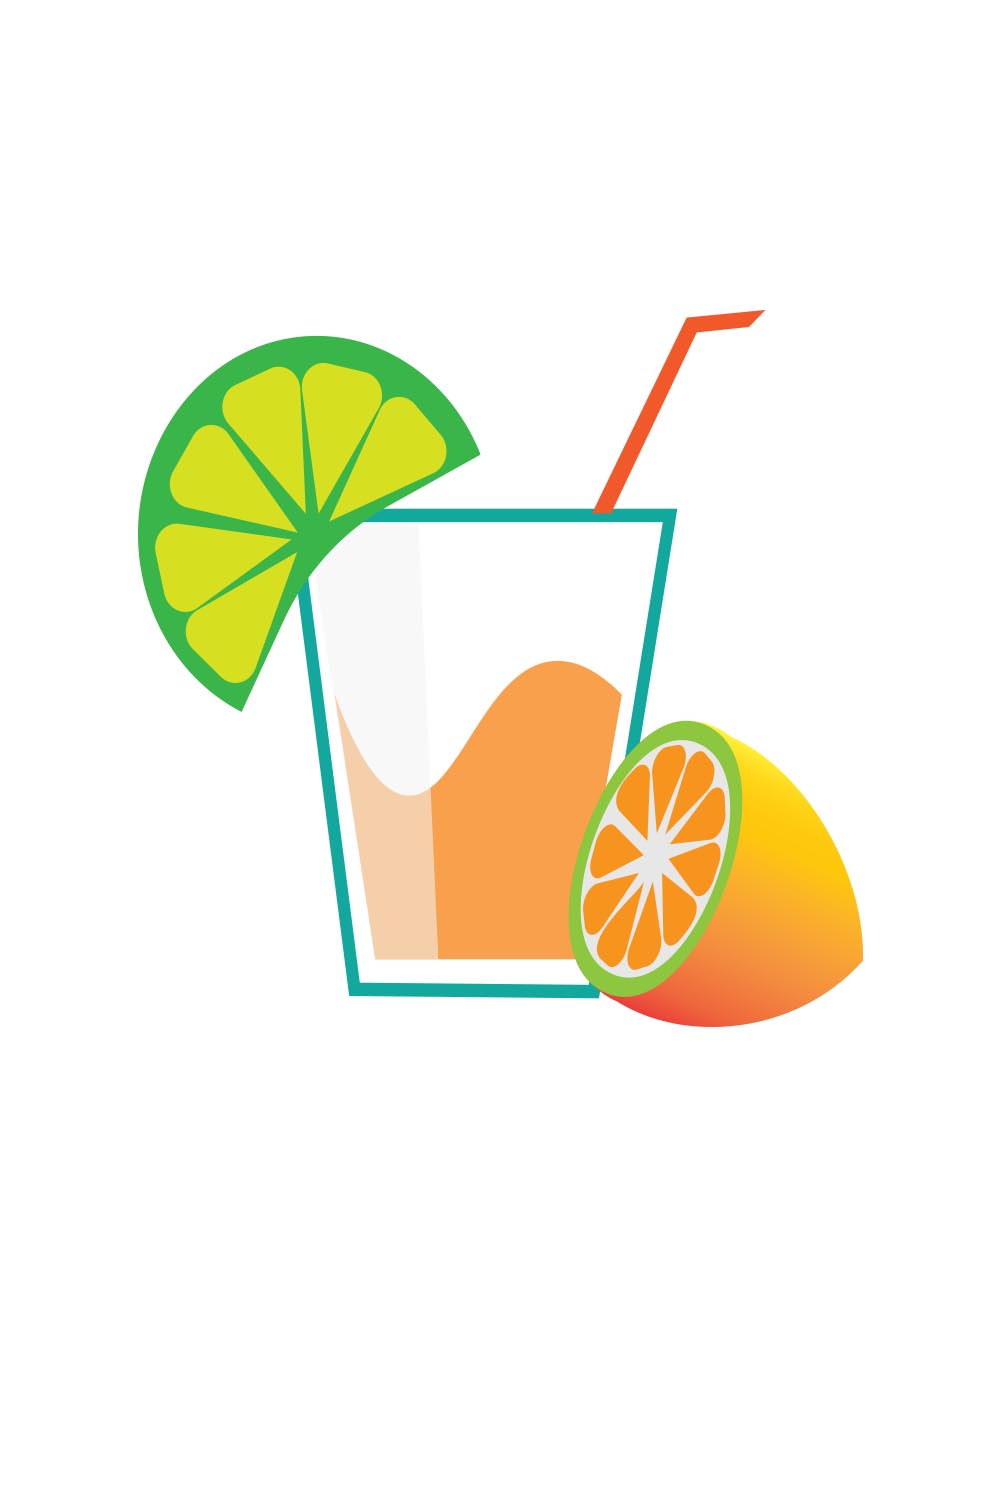 lemon juice logo pinterest preview image.